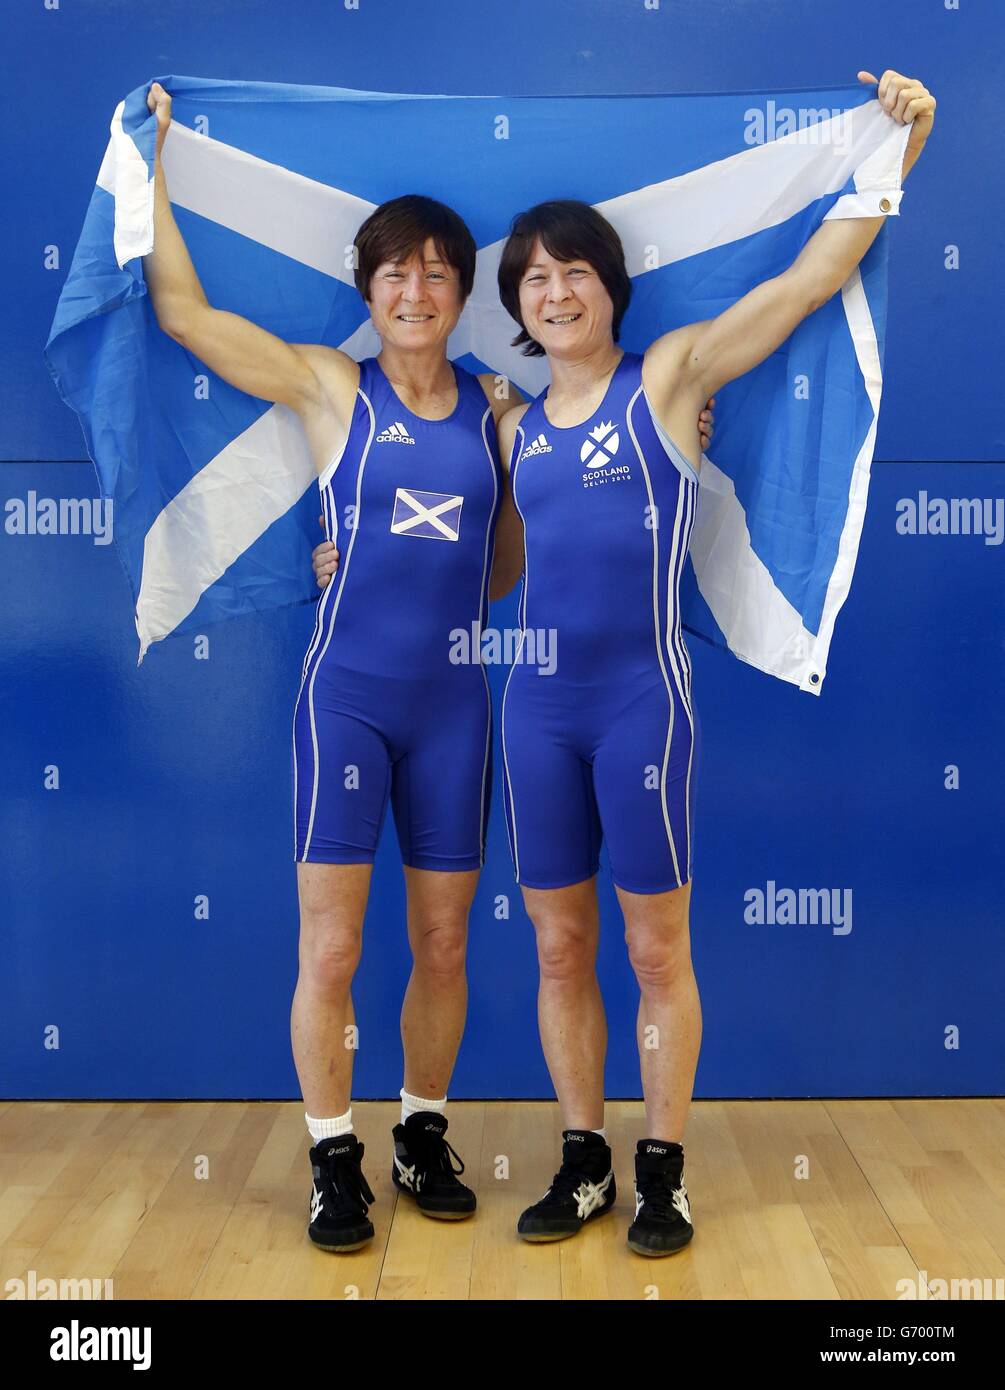 Glasgow 2014 Commonwealth Games Team Scotland Wrestlers, sorelle gemelle Fiona Robertson (a sinistra) e Donna Robertson (a destra), durante l'annuncio all'Olympia Boxing Gym, Glasgow. Foto Stock